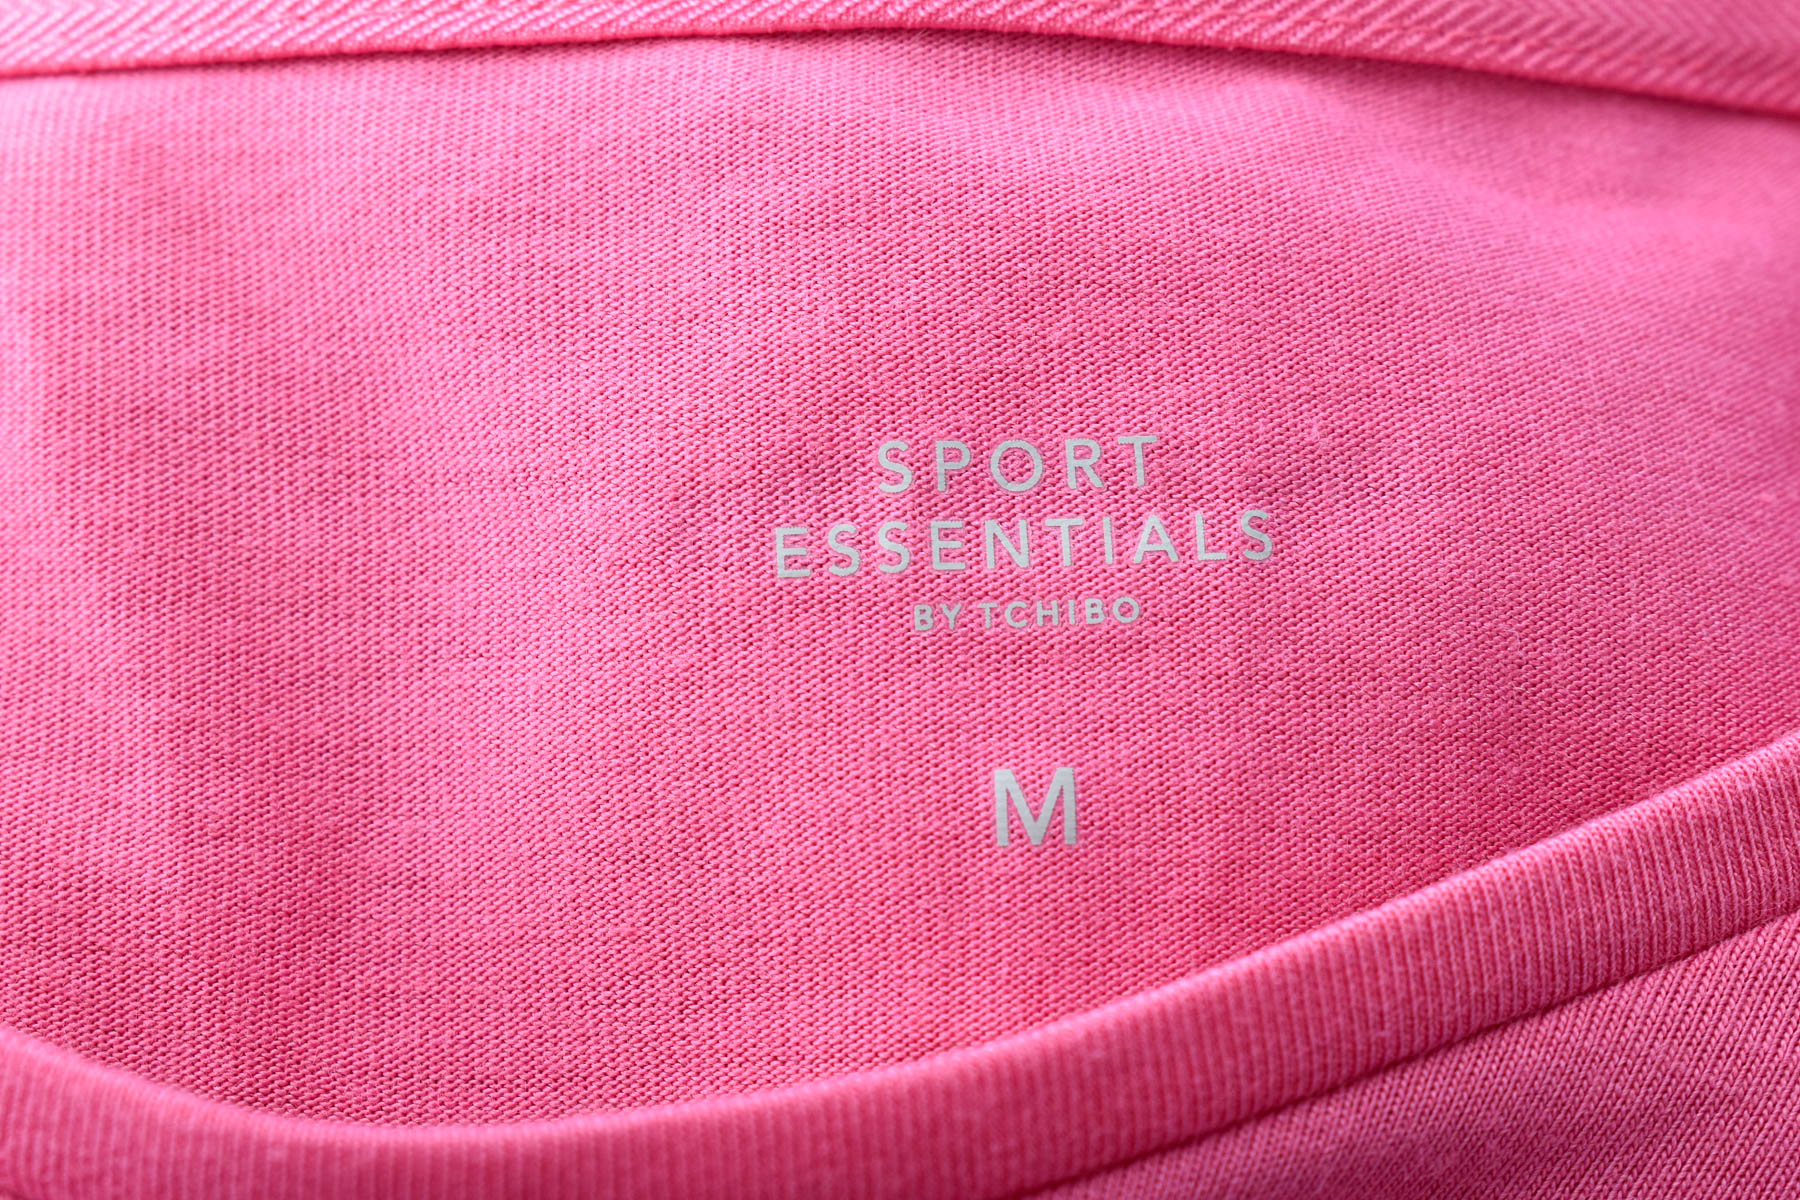 Women's t-shirt - Sport Essentials by Tchibo - 2